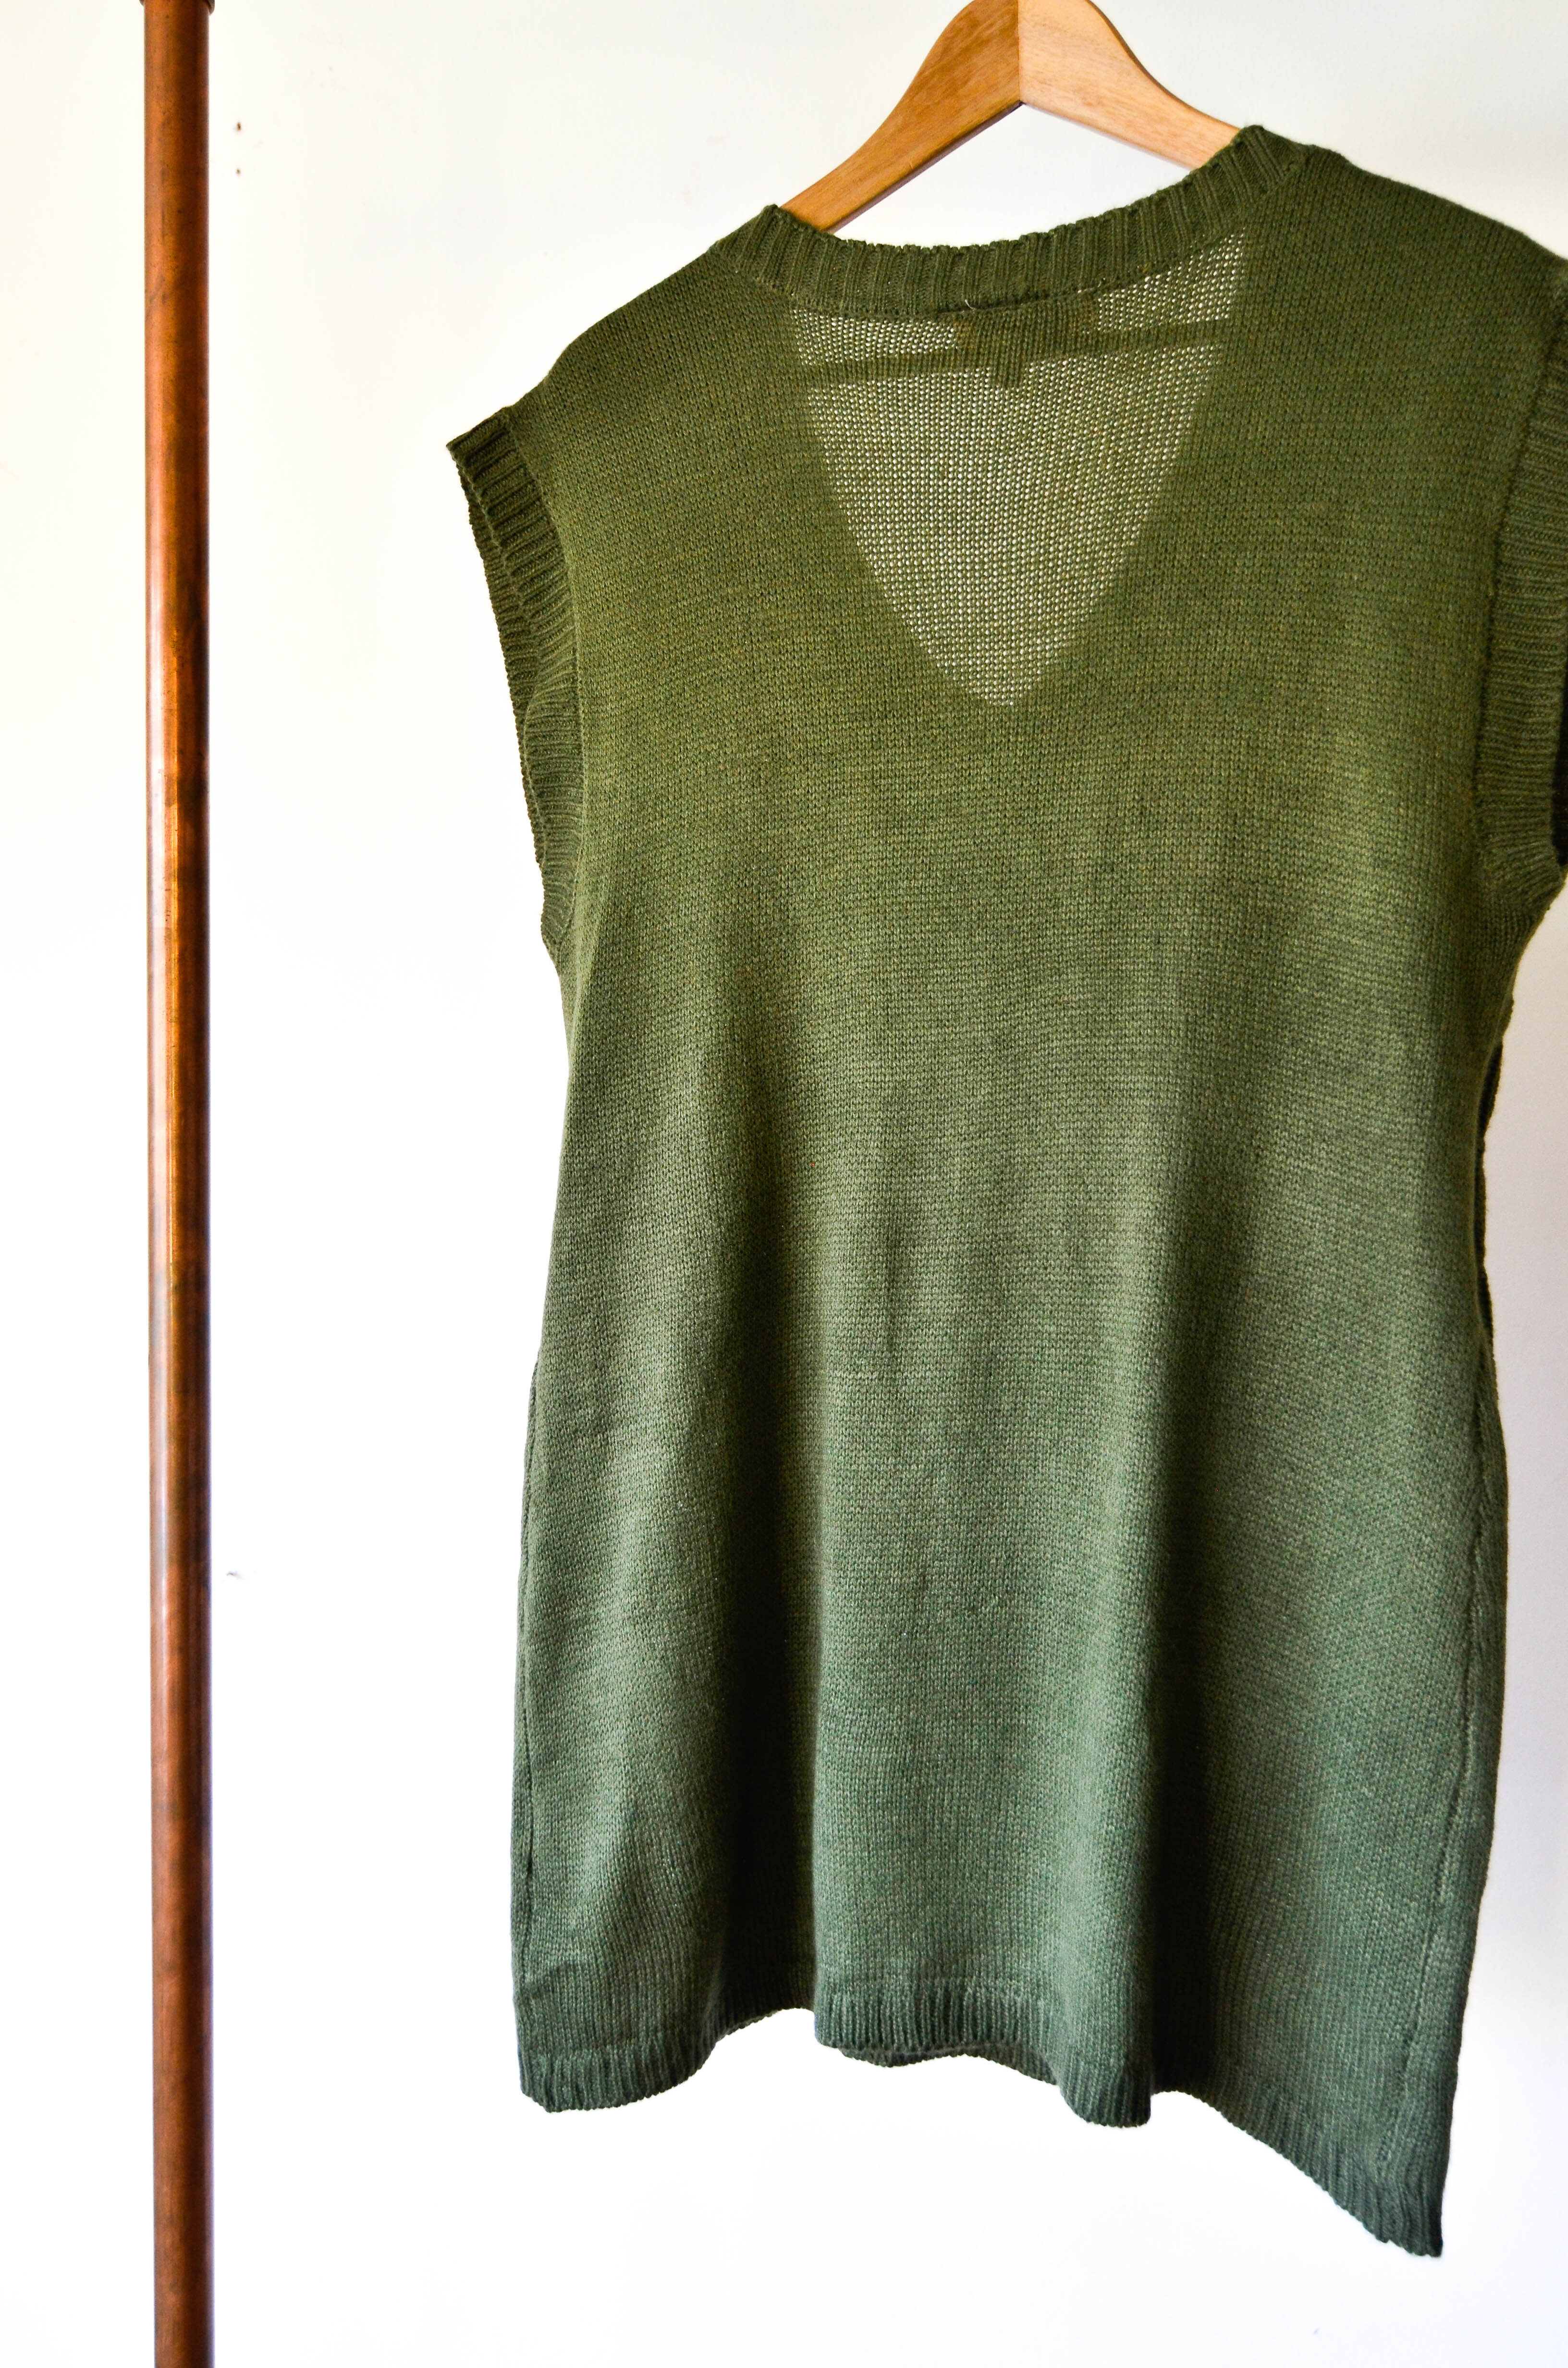 Sweater dress verde oliva trenzado